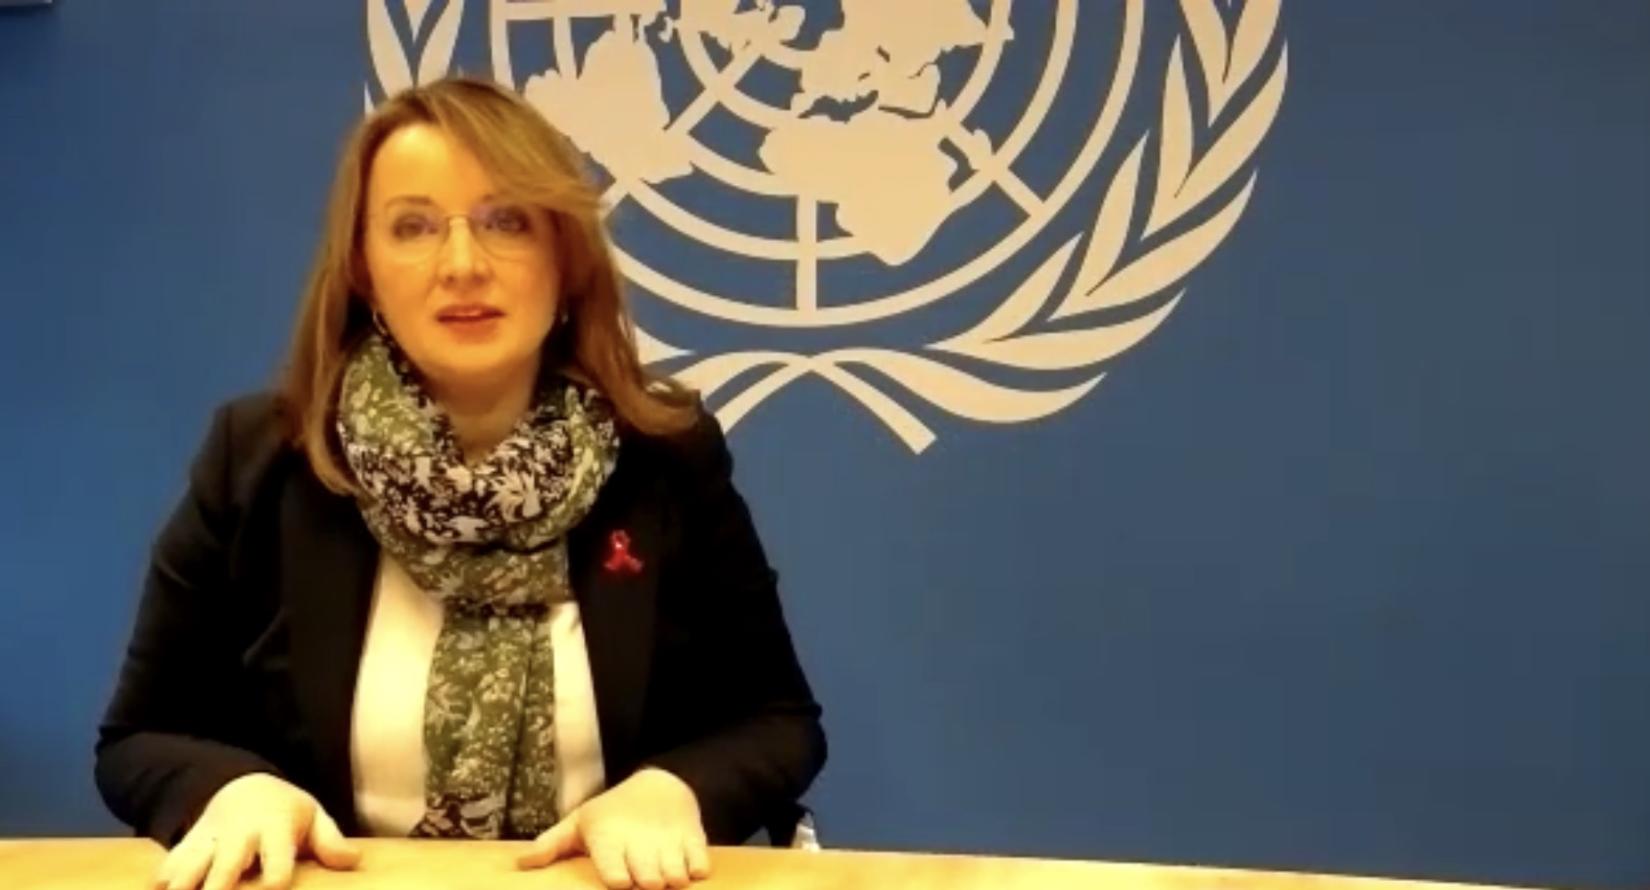 UN Resident Coordinator in Belarus, Joanna Kazana-Wisniowiecki